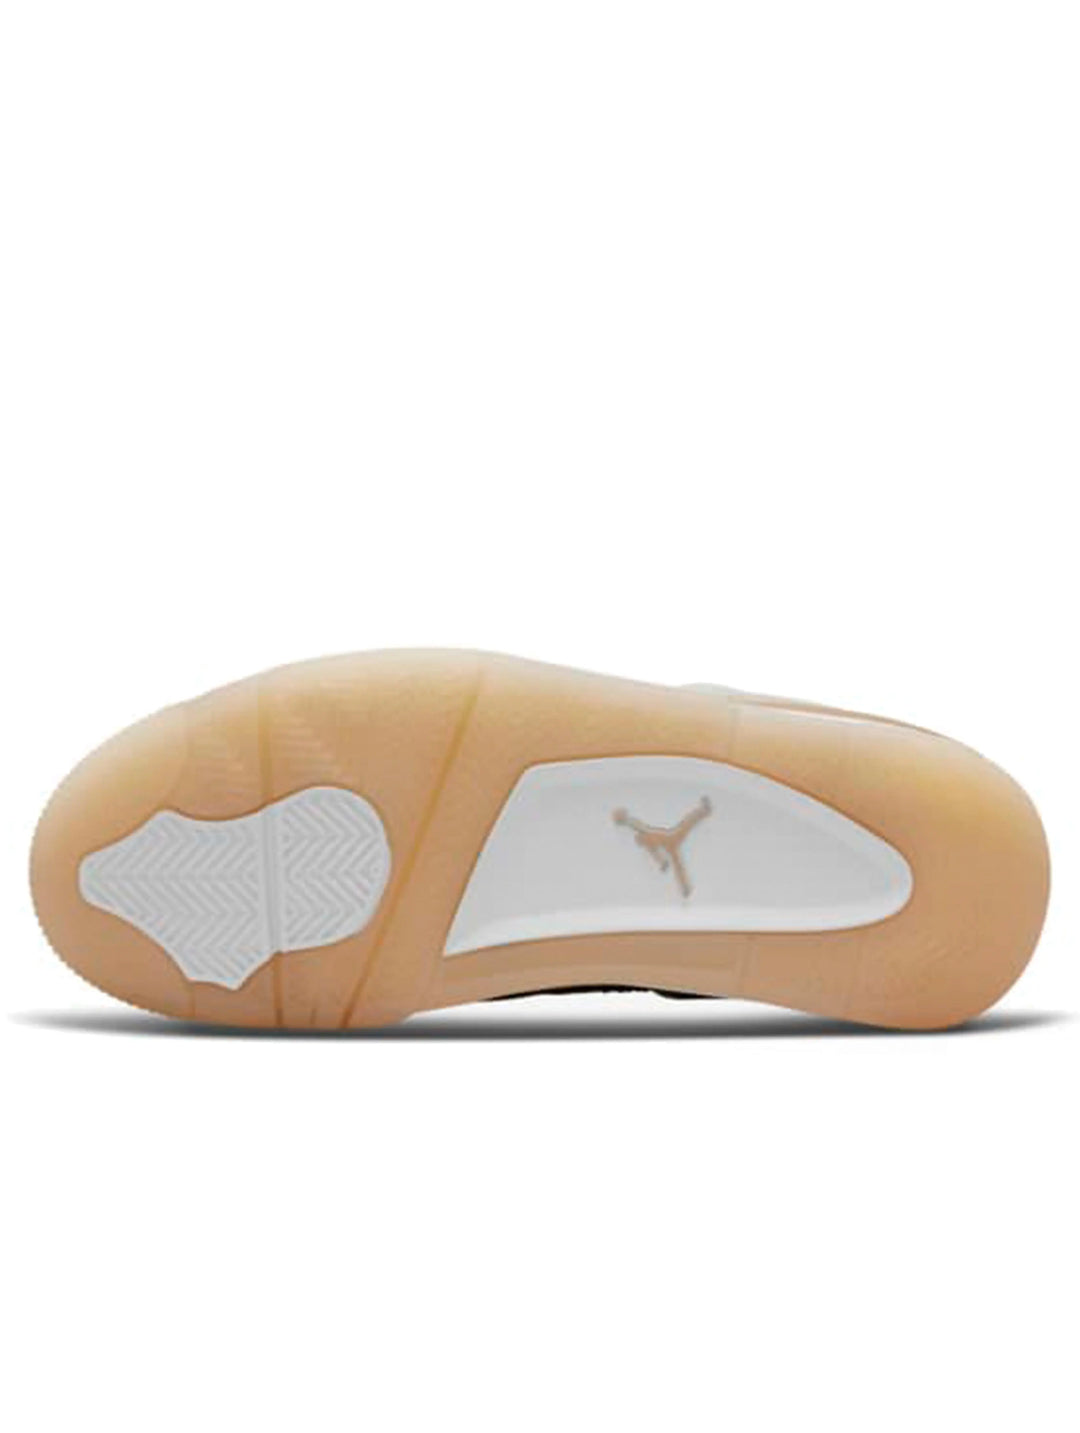 Nike Air Jordan 4 Retro Shimmer (W) [Damaged Box] Prior